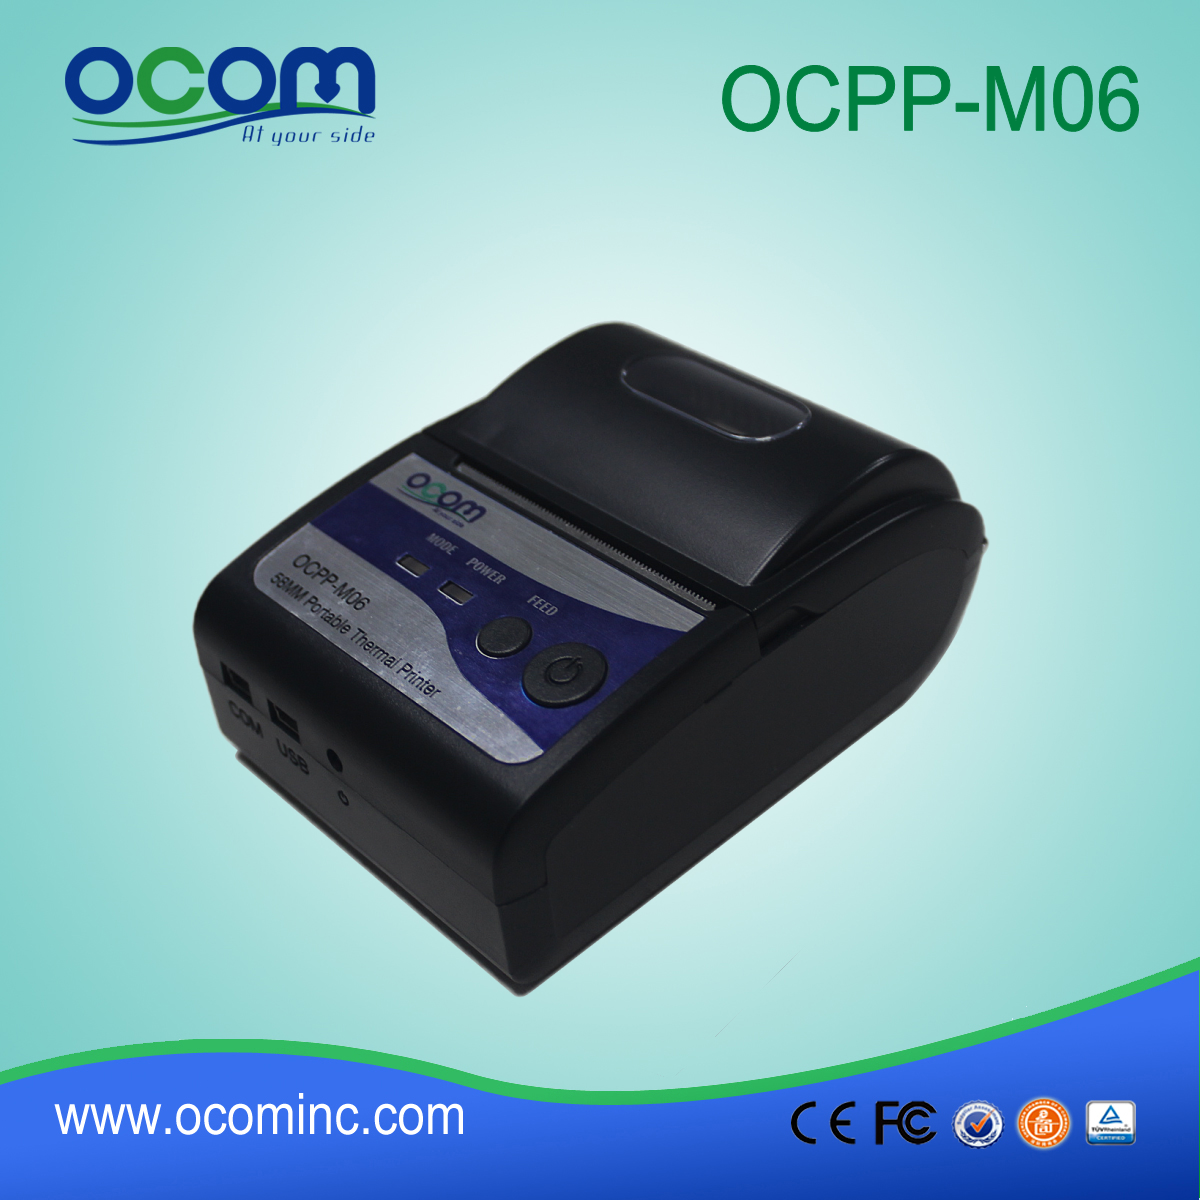 (OCPP-M06) OCOM 2015 ζεστό πώλησης android φορητός εκτυπωτής, φορητό εκτυπωτή bluetooth